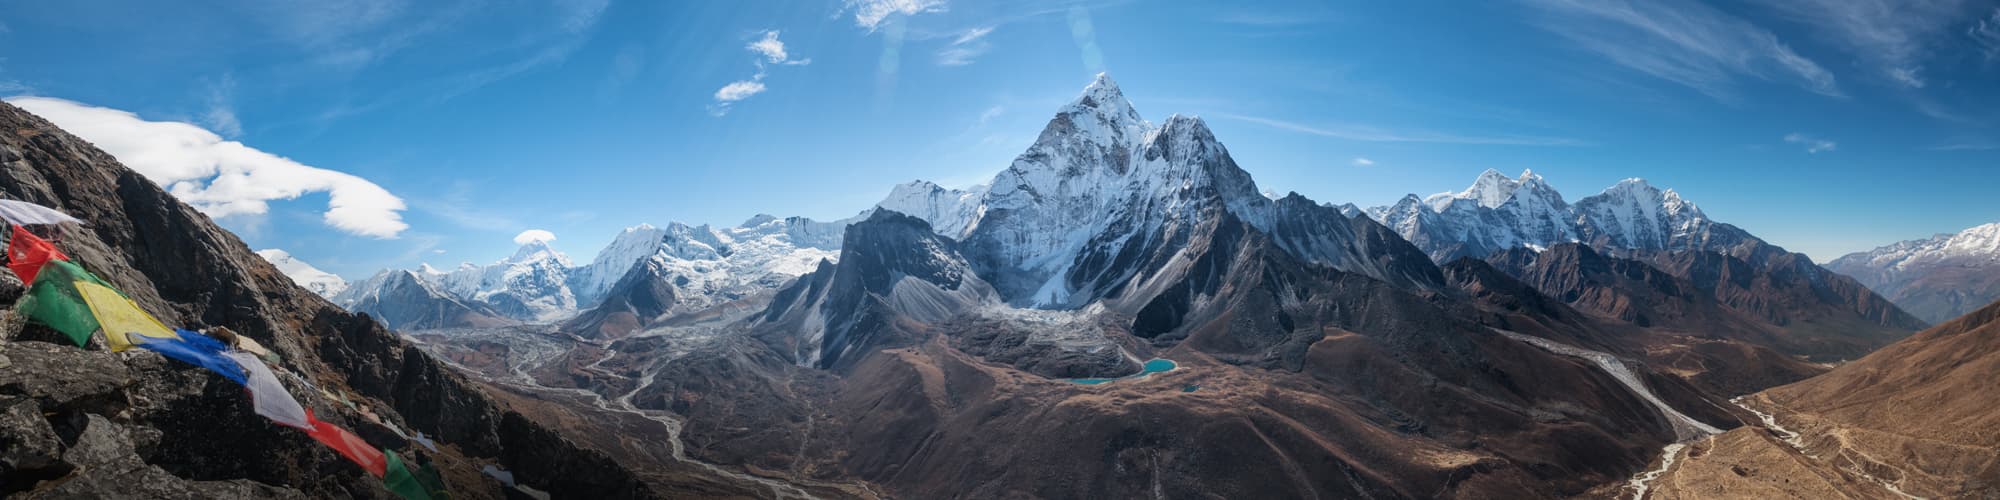 Voyage en famille Inde Himalayenne © Alex Shestakov / Adobe Stock